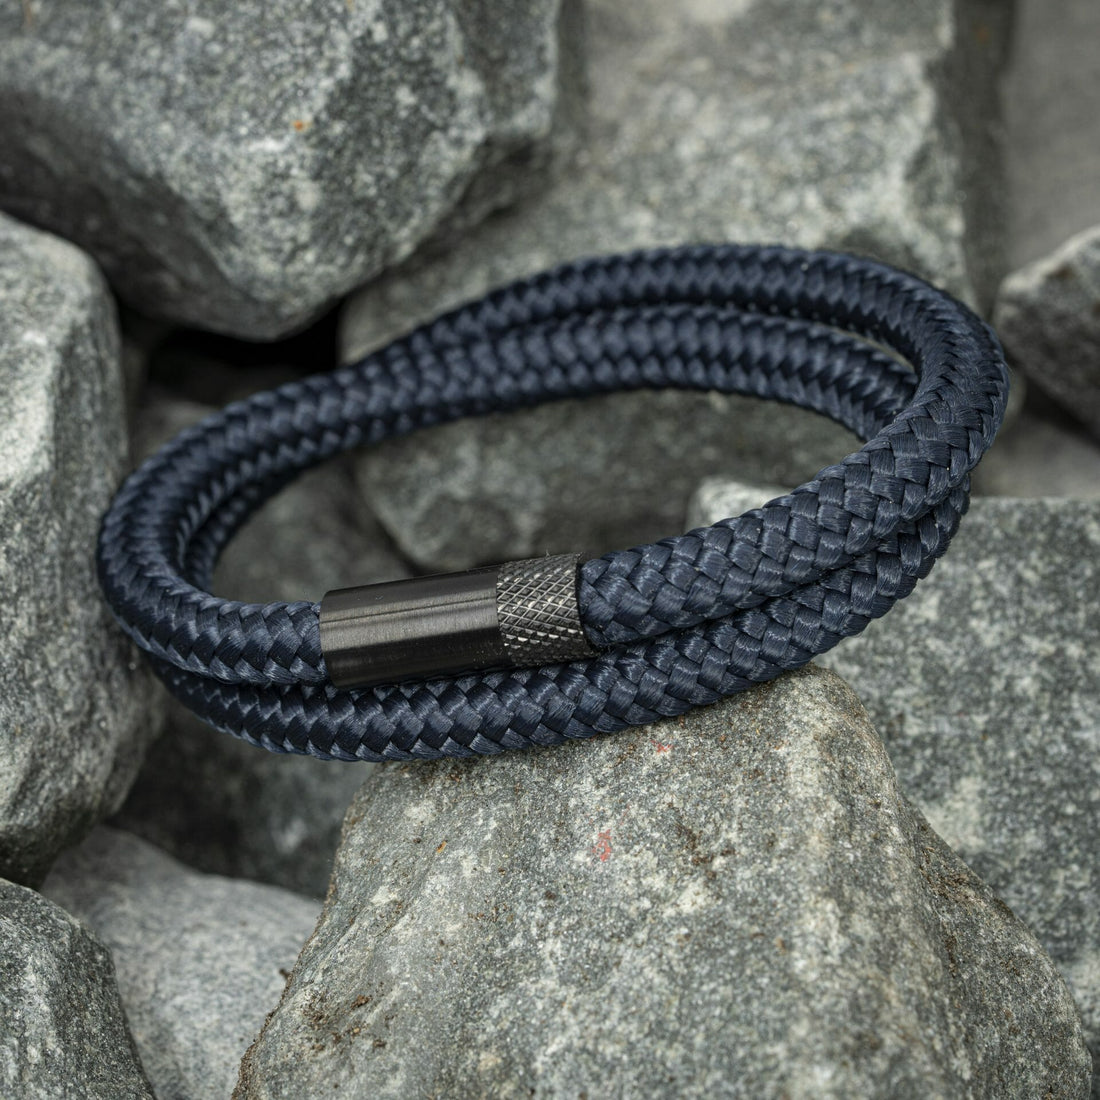 Elite armband zwart - Marineblauw touw